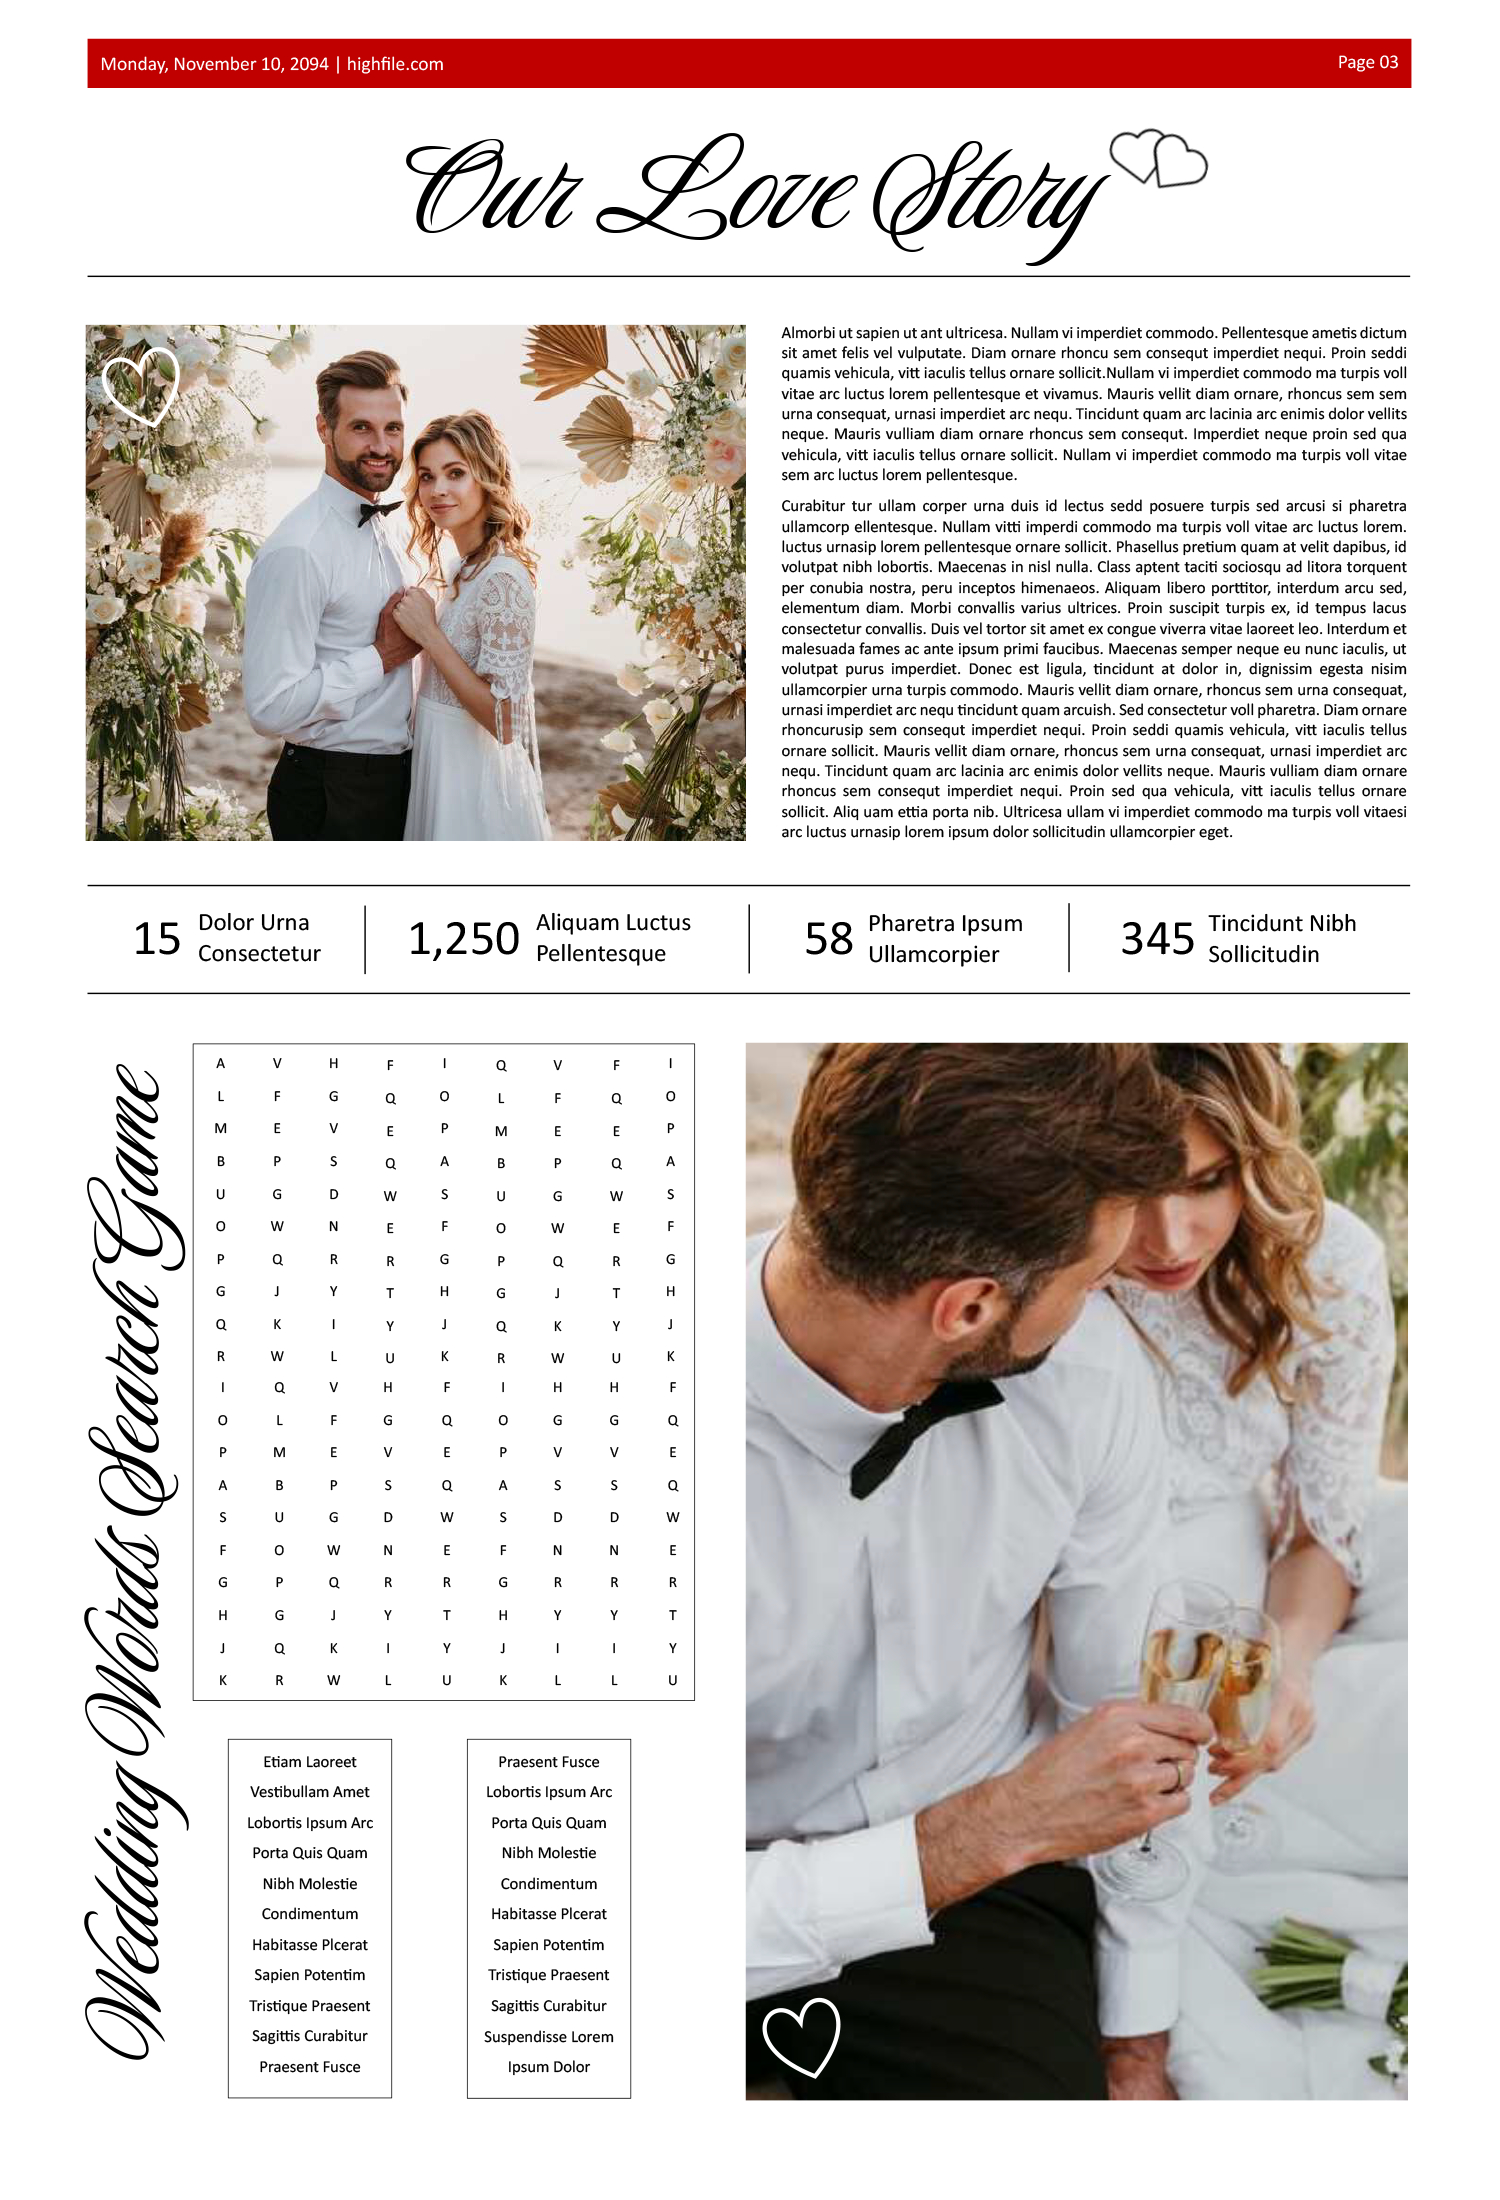 15x22 in Broadsheet Wedding Newspaper Template - Page 03